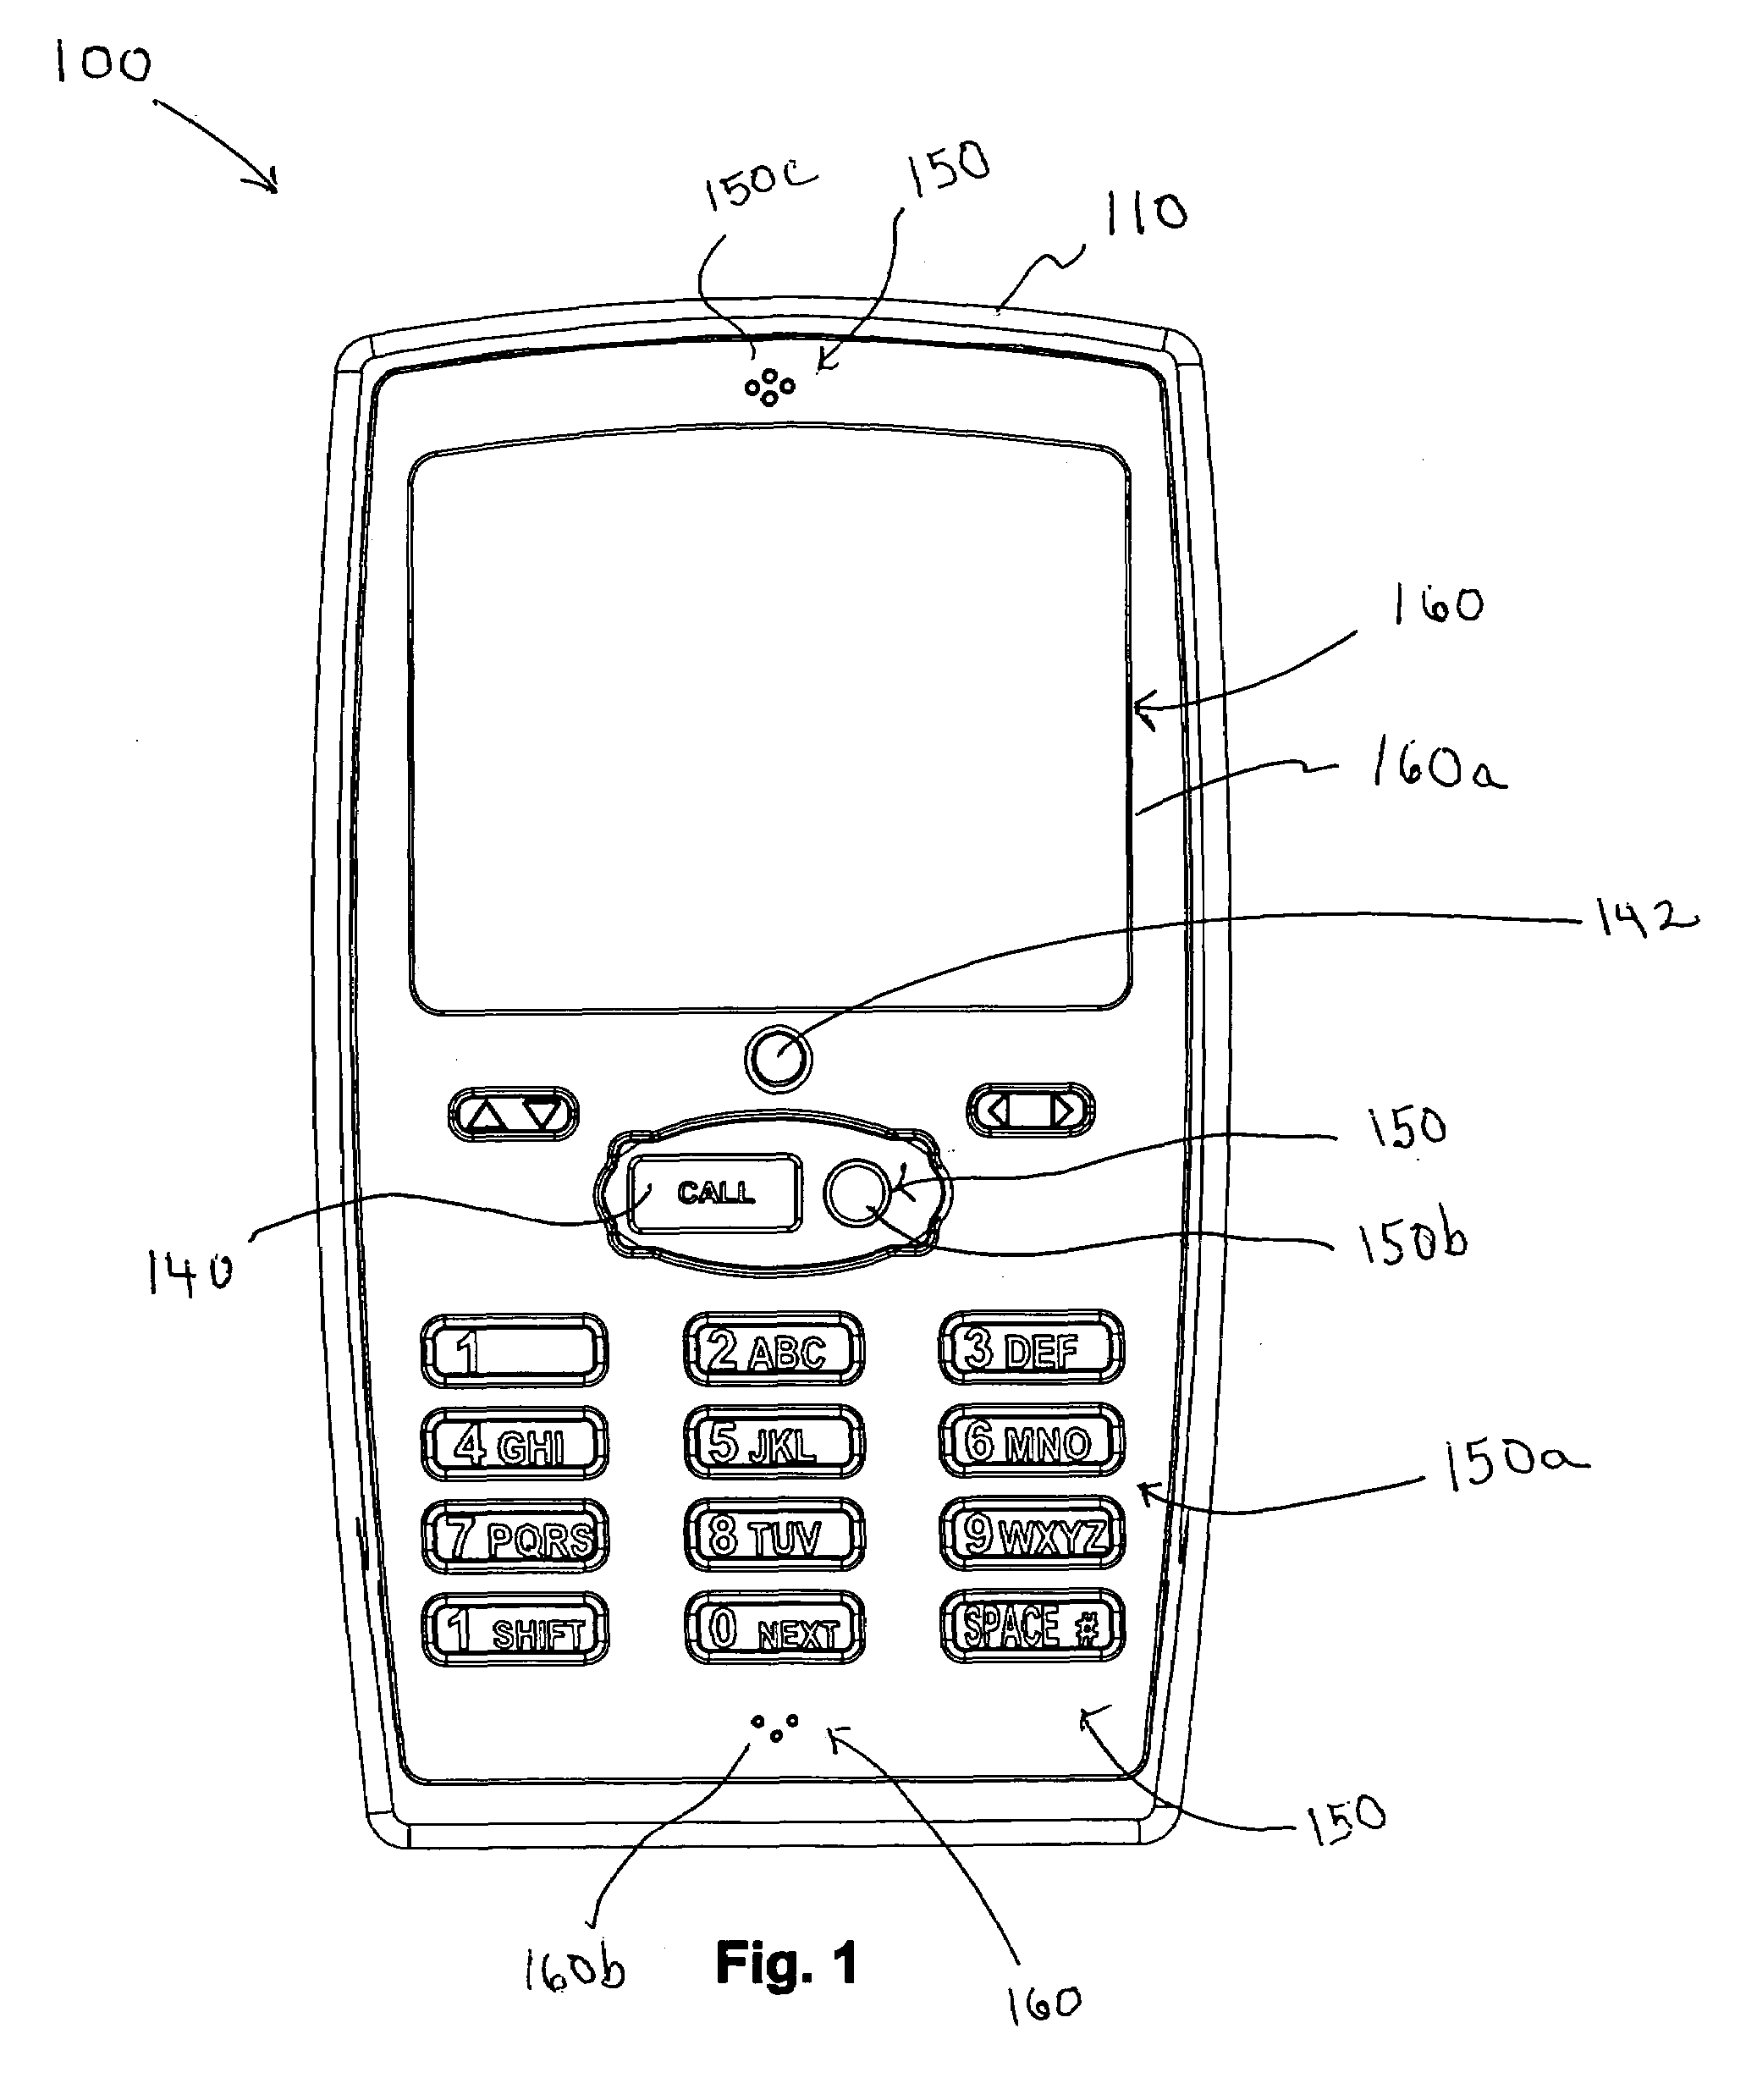 Communications device